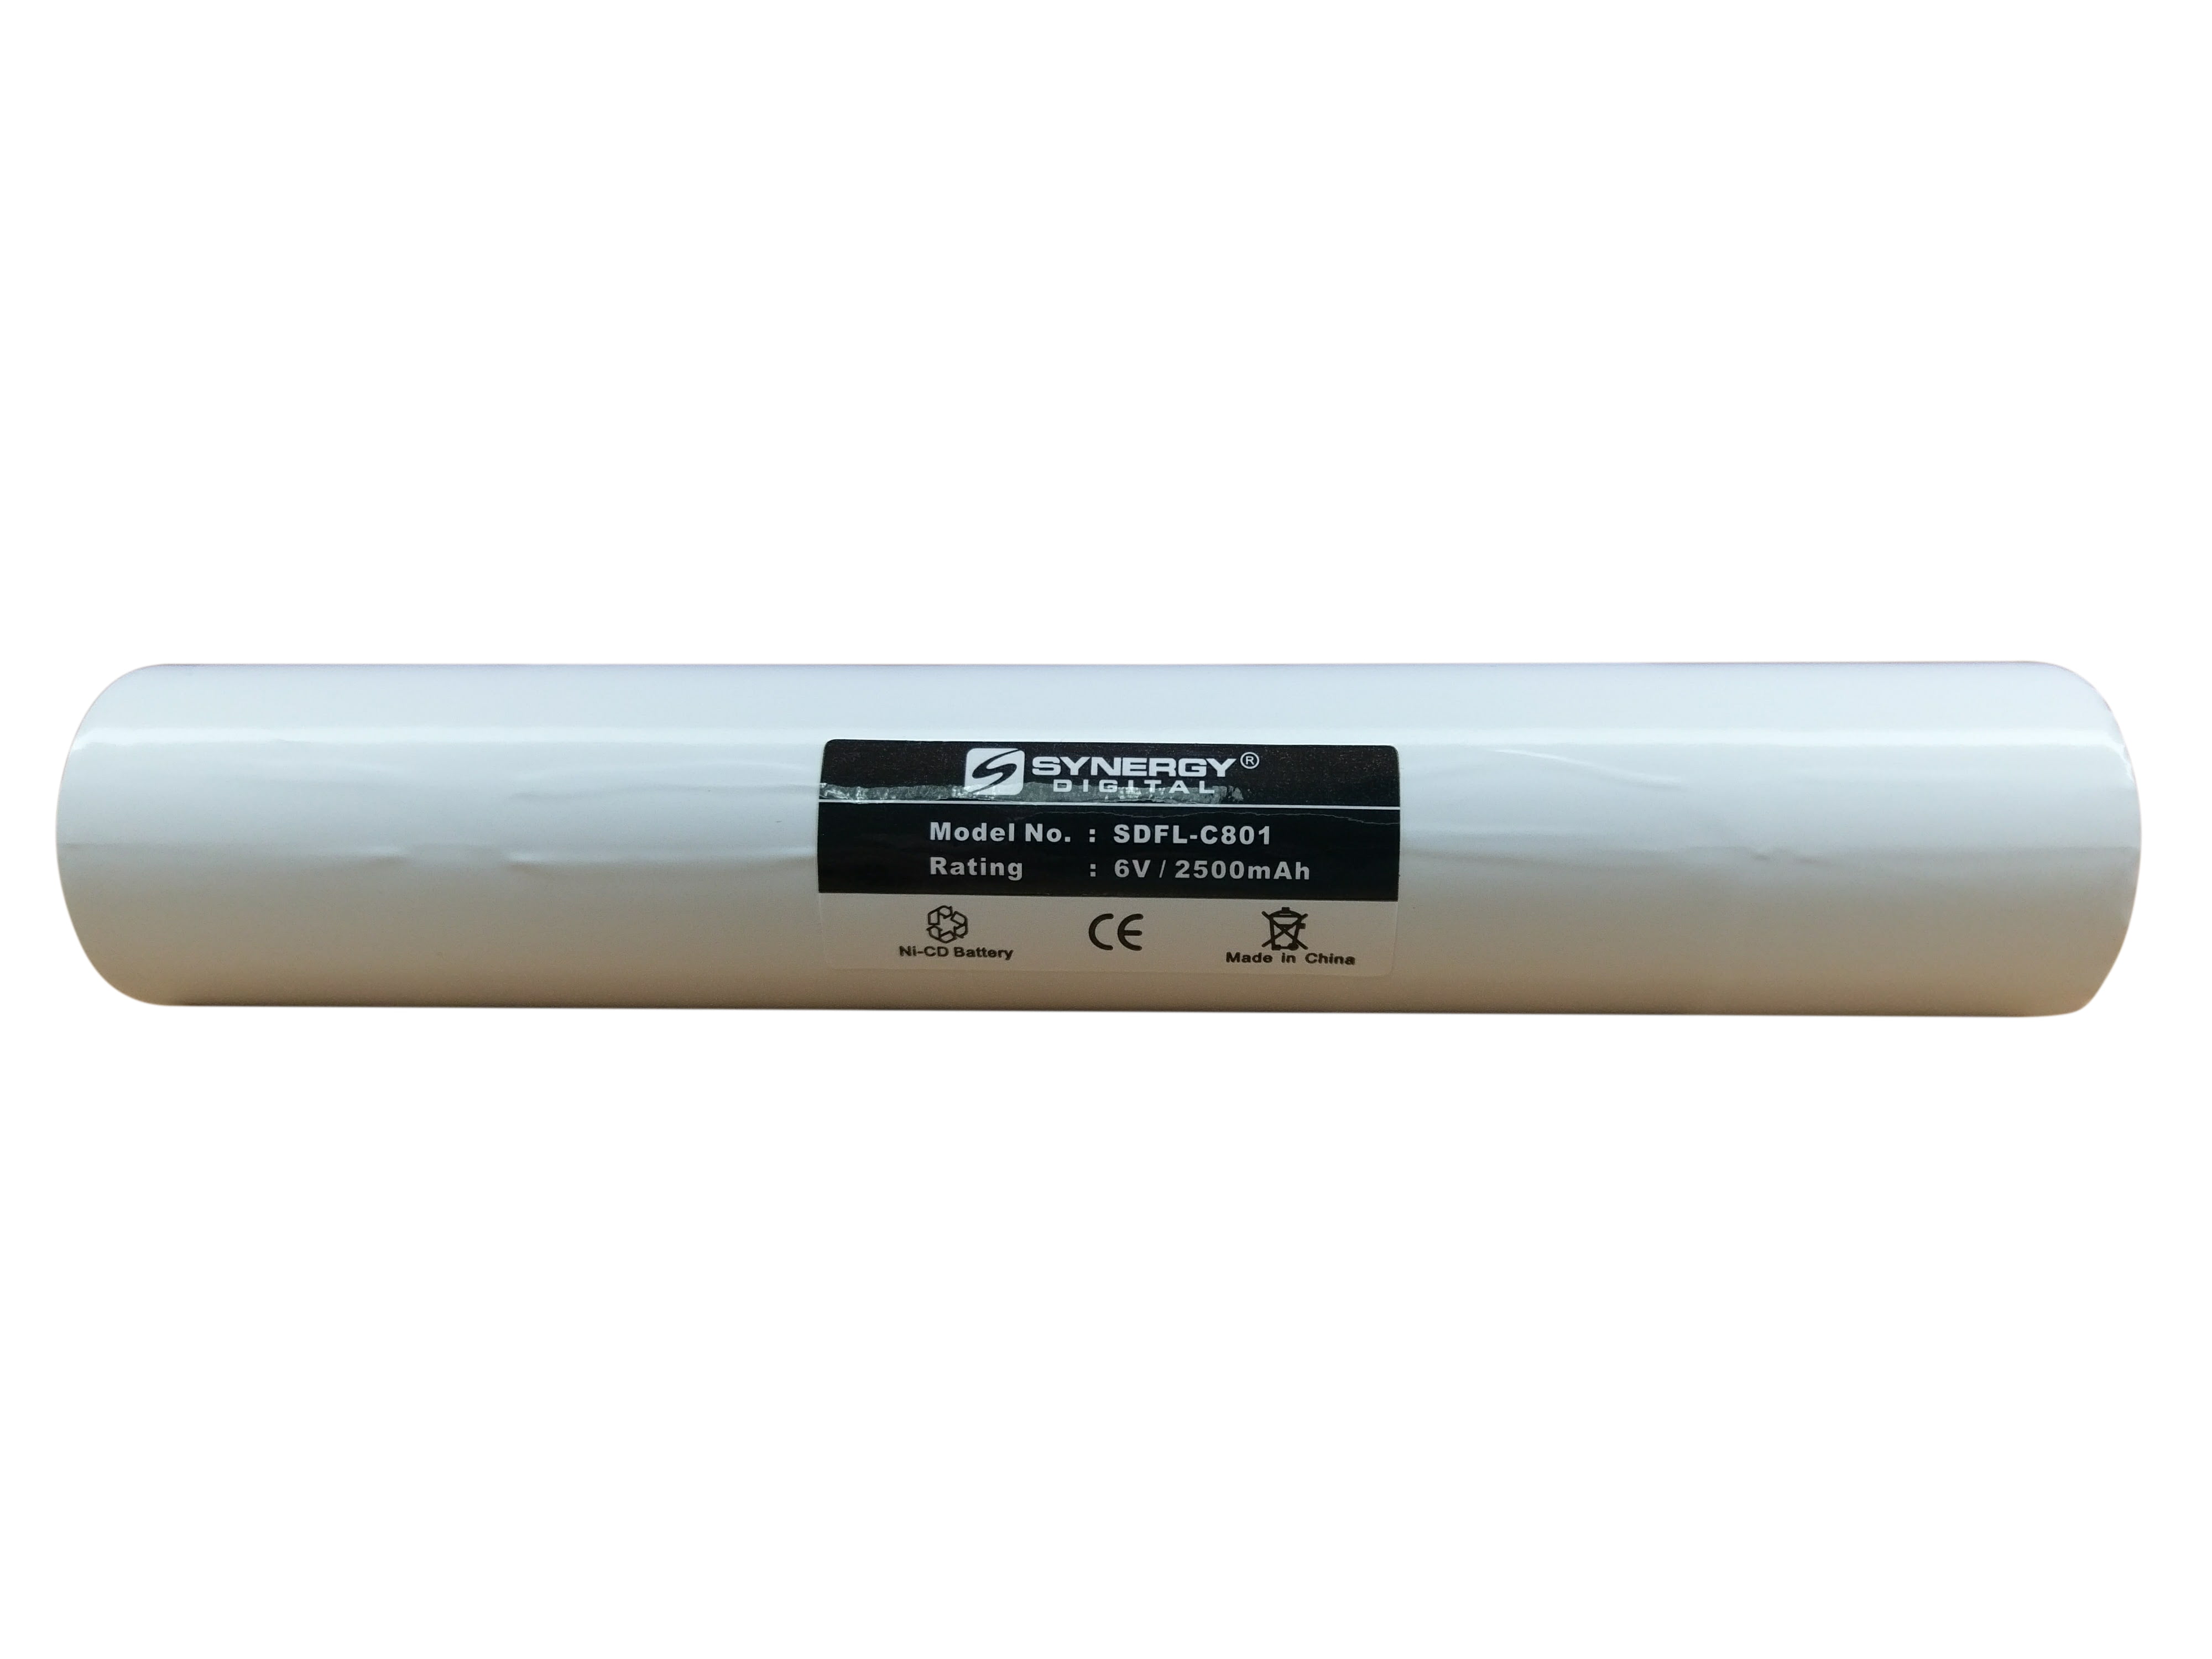 6V NICD Flashlight Battery Replaces Streamlight 15X1701 40070131 GE 405462100 